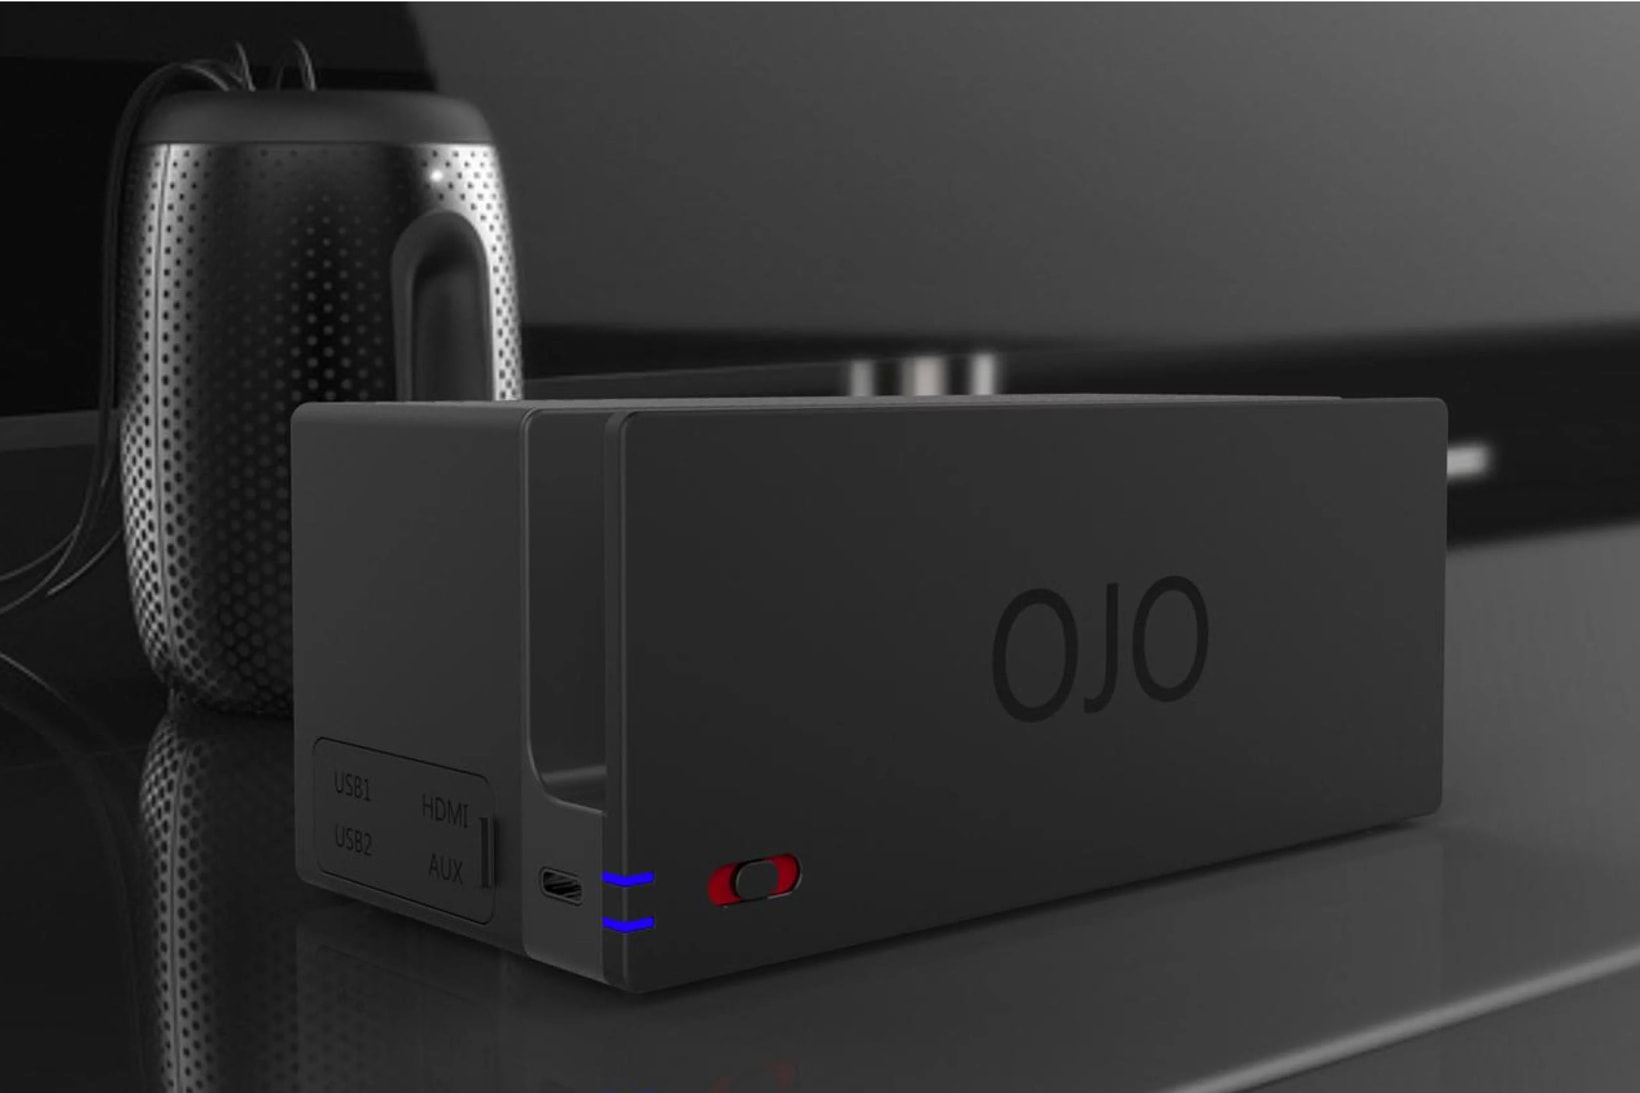 The OJO Projector Nintendo Switch Accessory